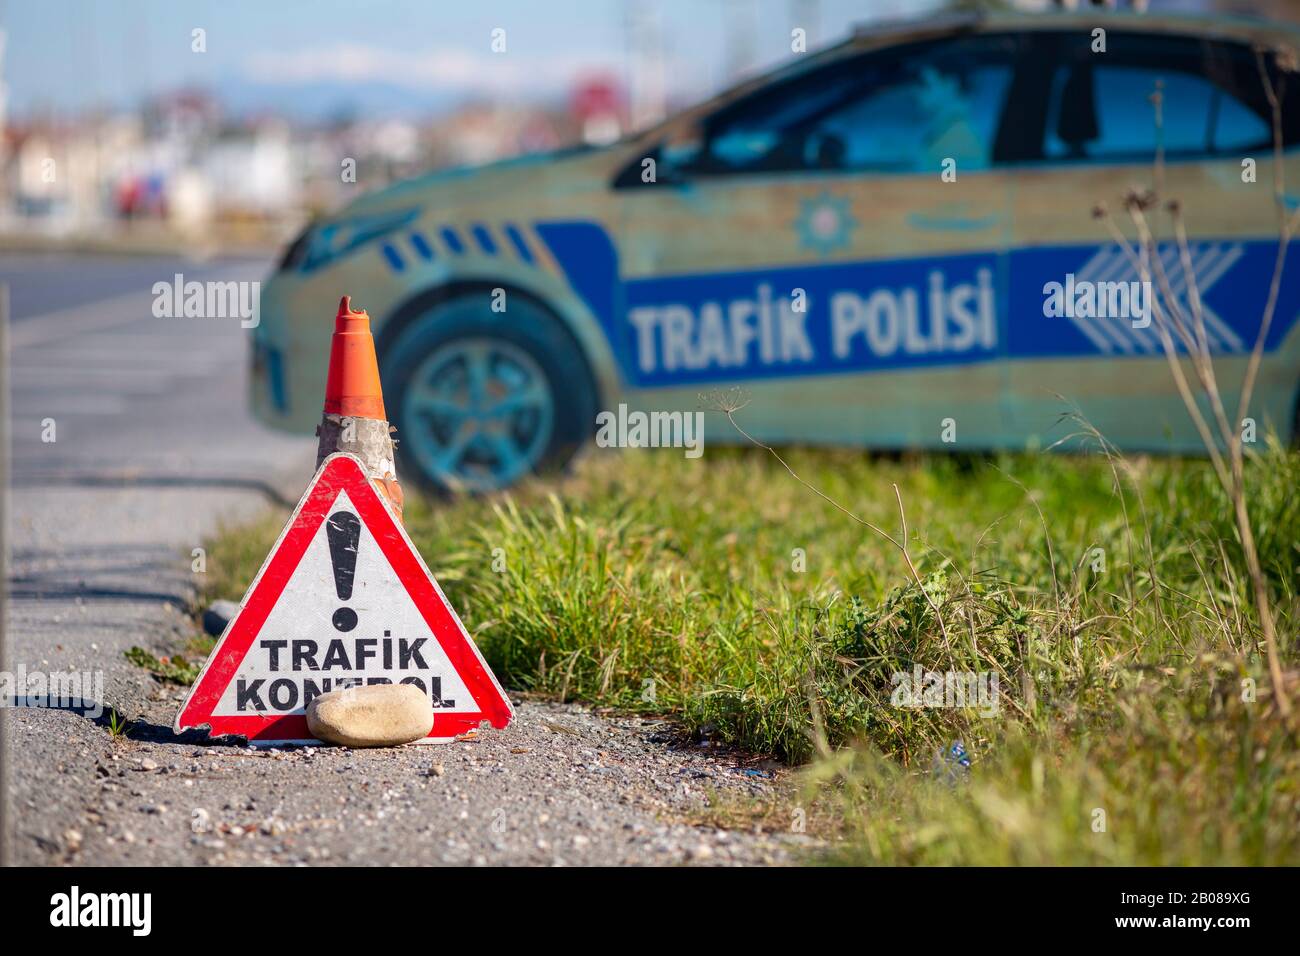 Turkish trafik kontrol sign in front of a fake police car. Trafik kontrol means traffic control. Stock Photo